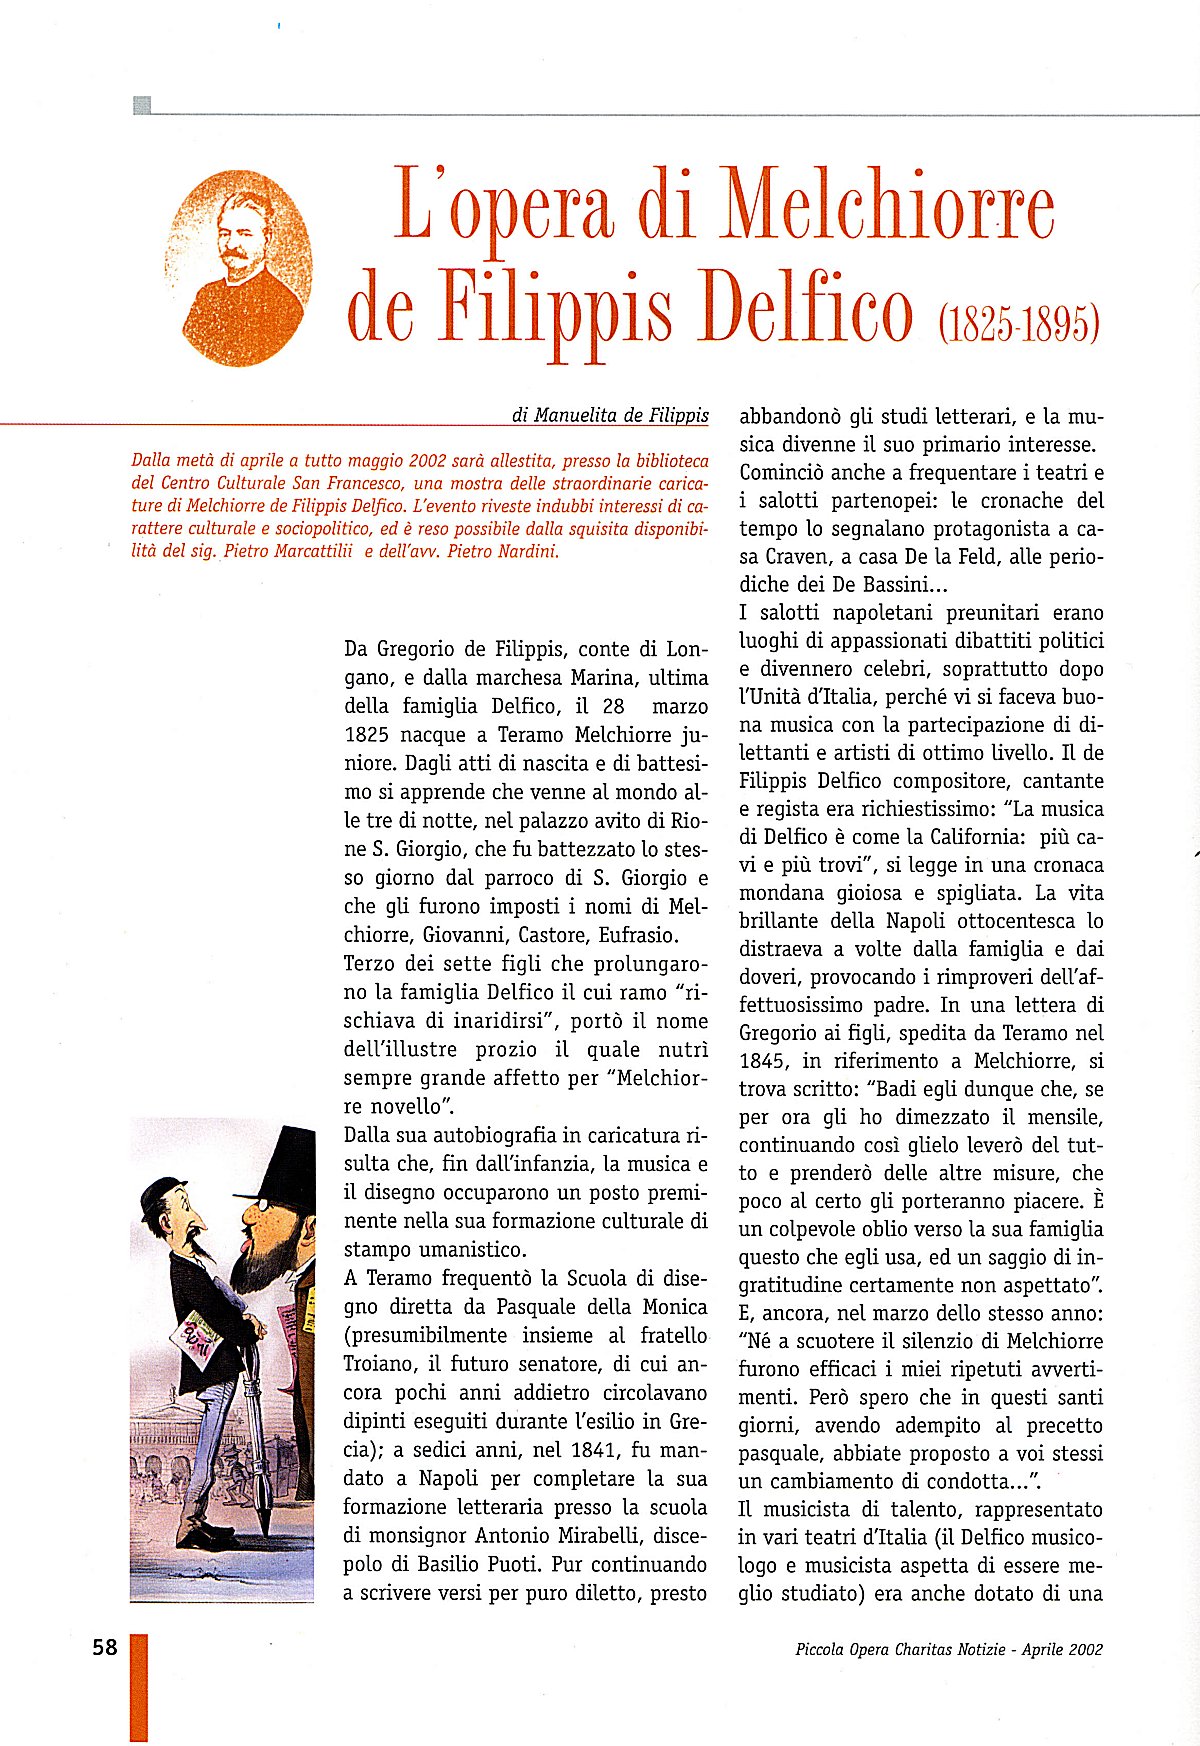 "Piccola Opera Charitas", anno II, n. 1, gennaio-aprile 2002, pag. 58